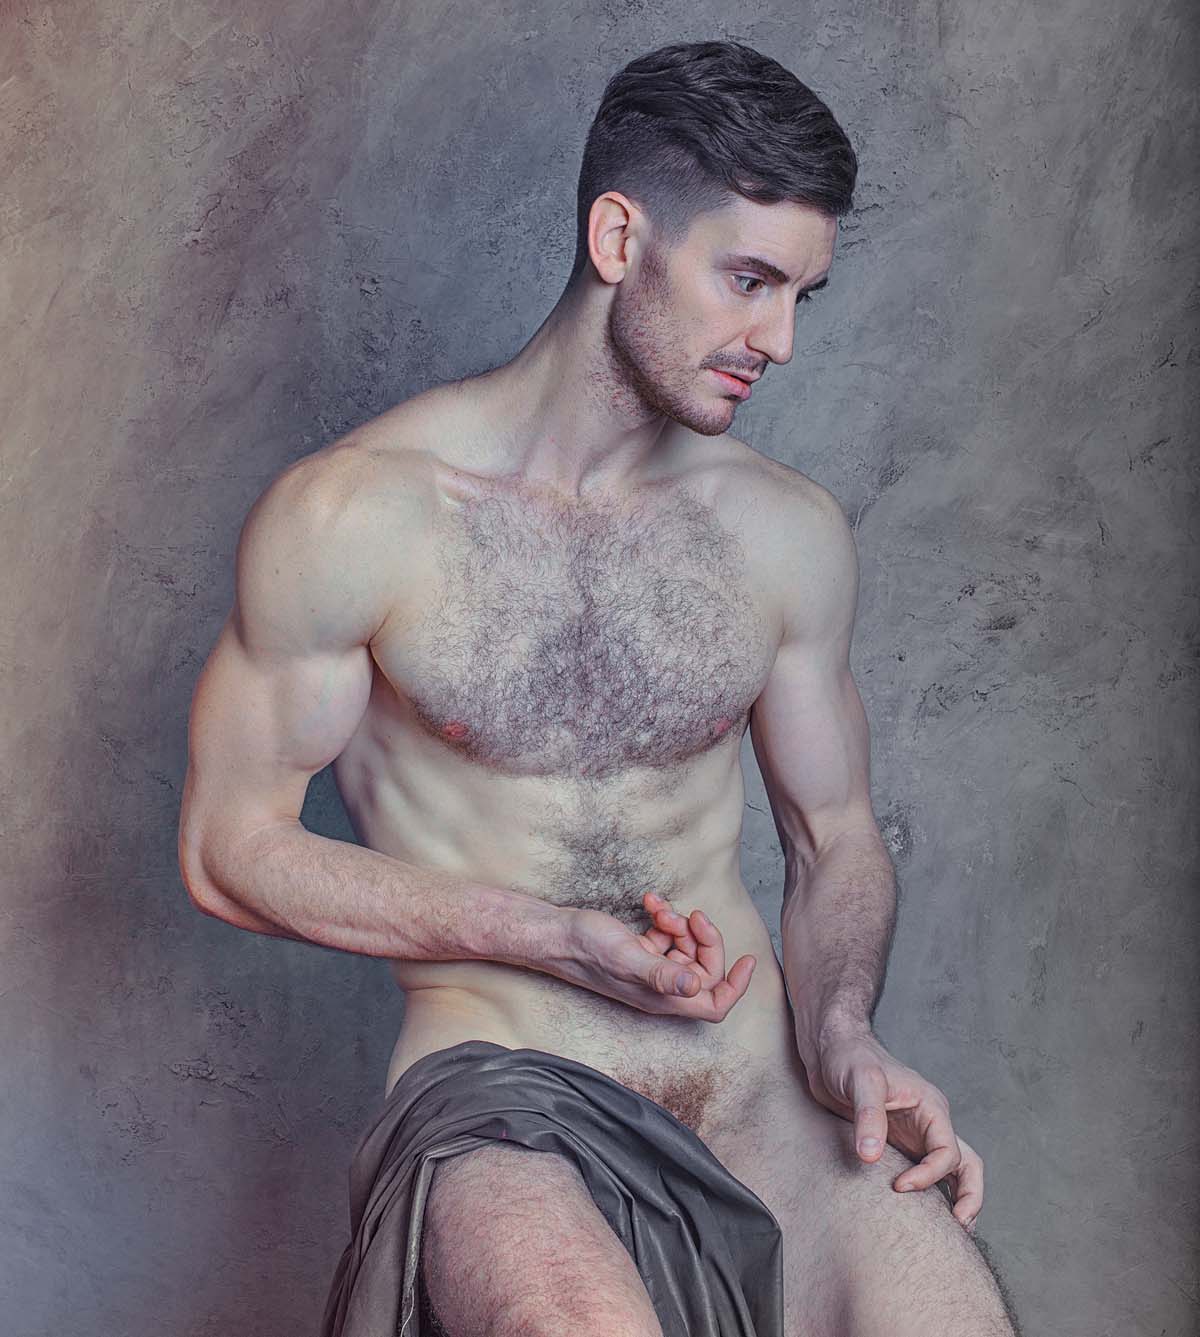 fine-art-male-nude-photography-by-troy-schooneman---the-architect.jpg. 